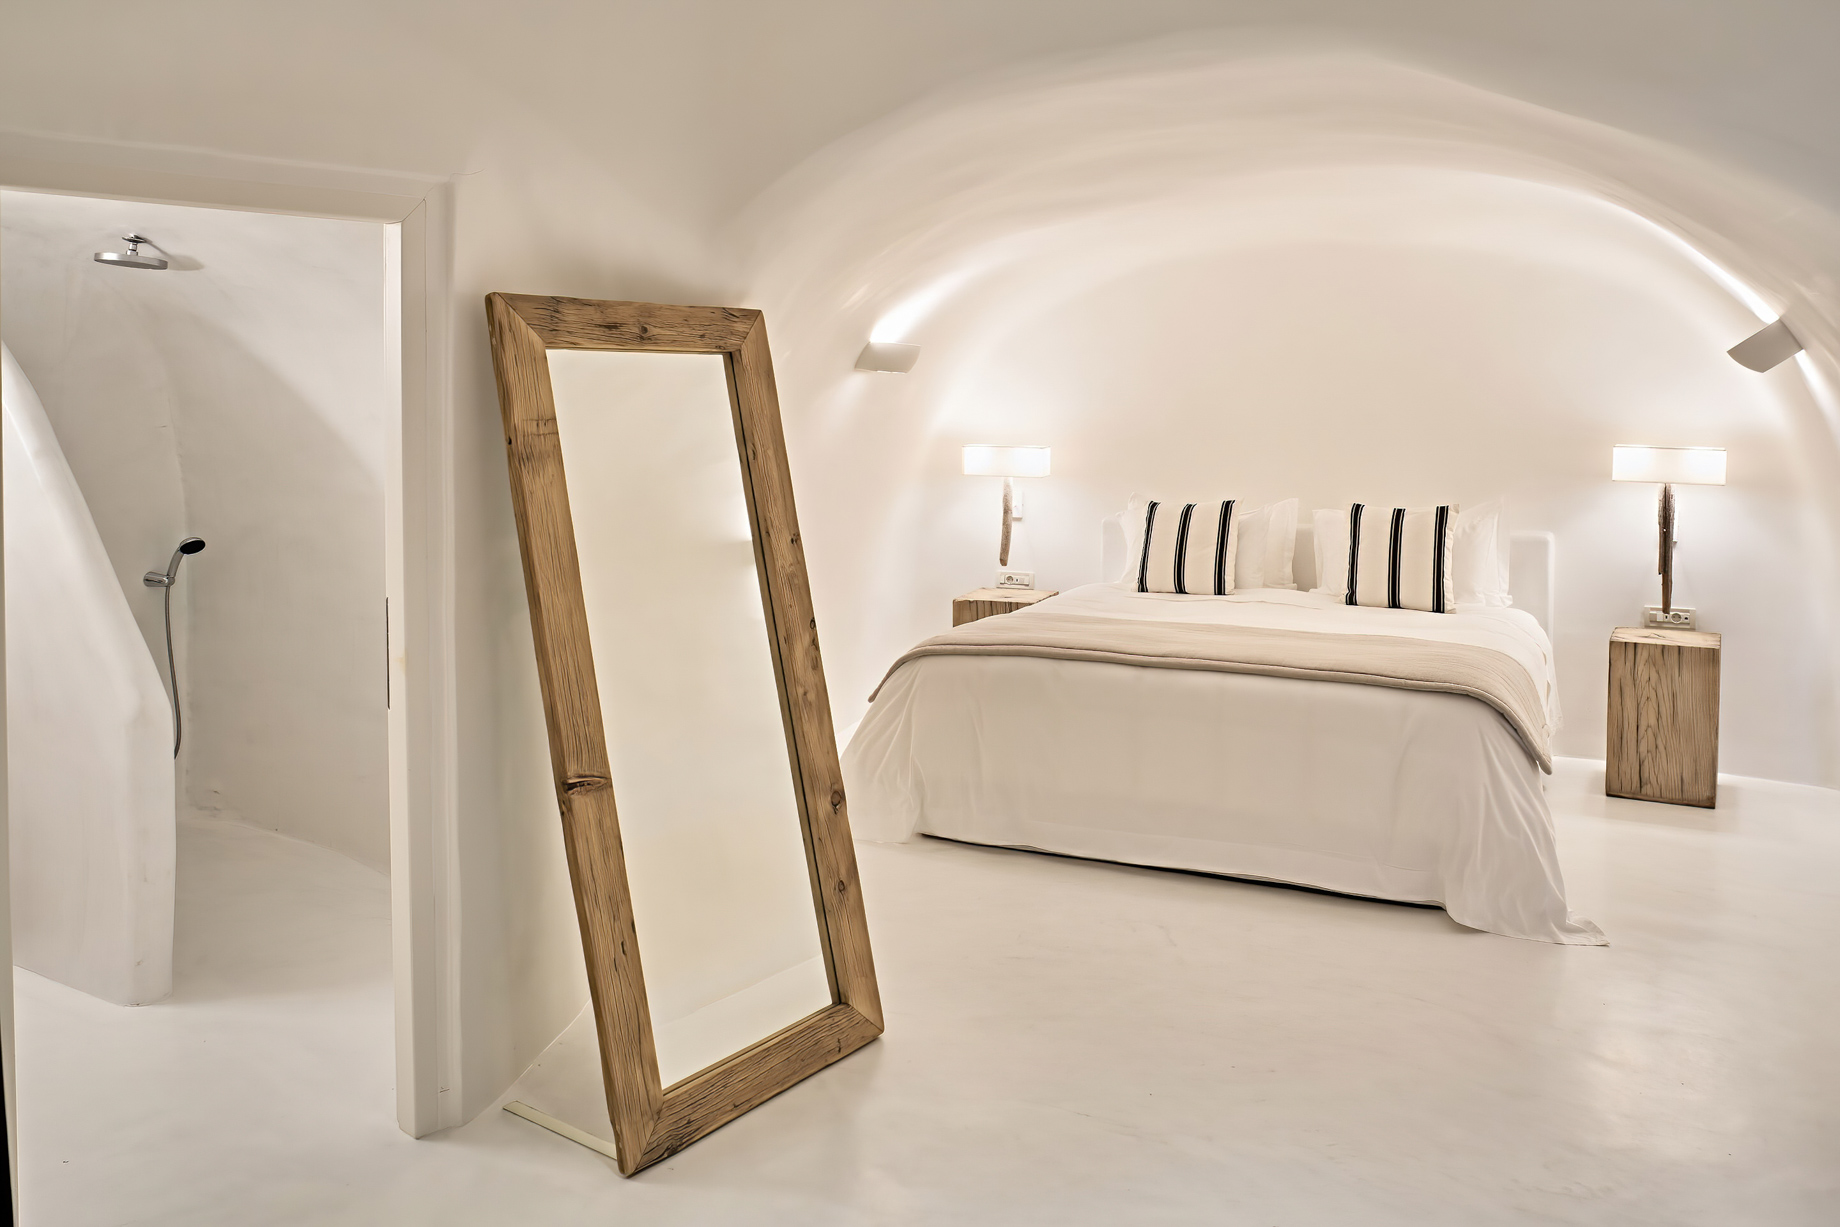 Mystique Hotel Santorini – Oia, Santorini Island, Greece – Holistic Villa Bedroom